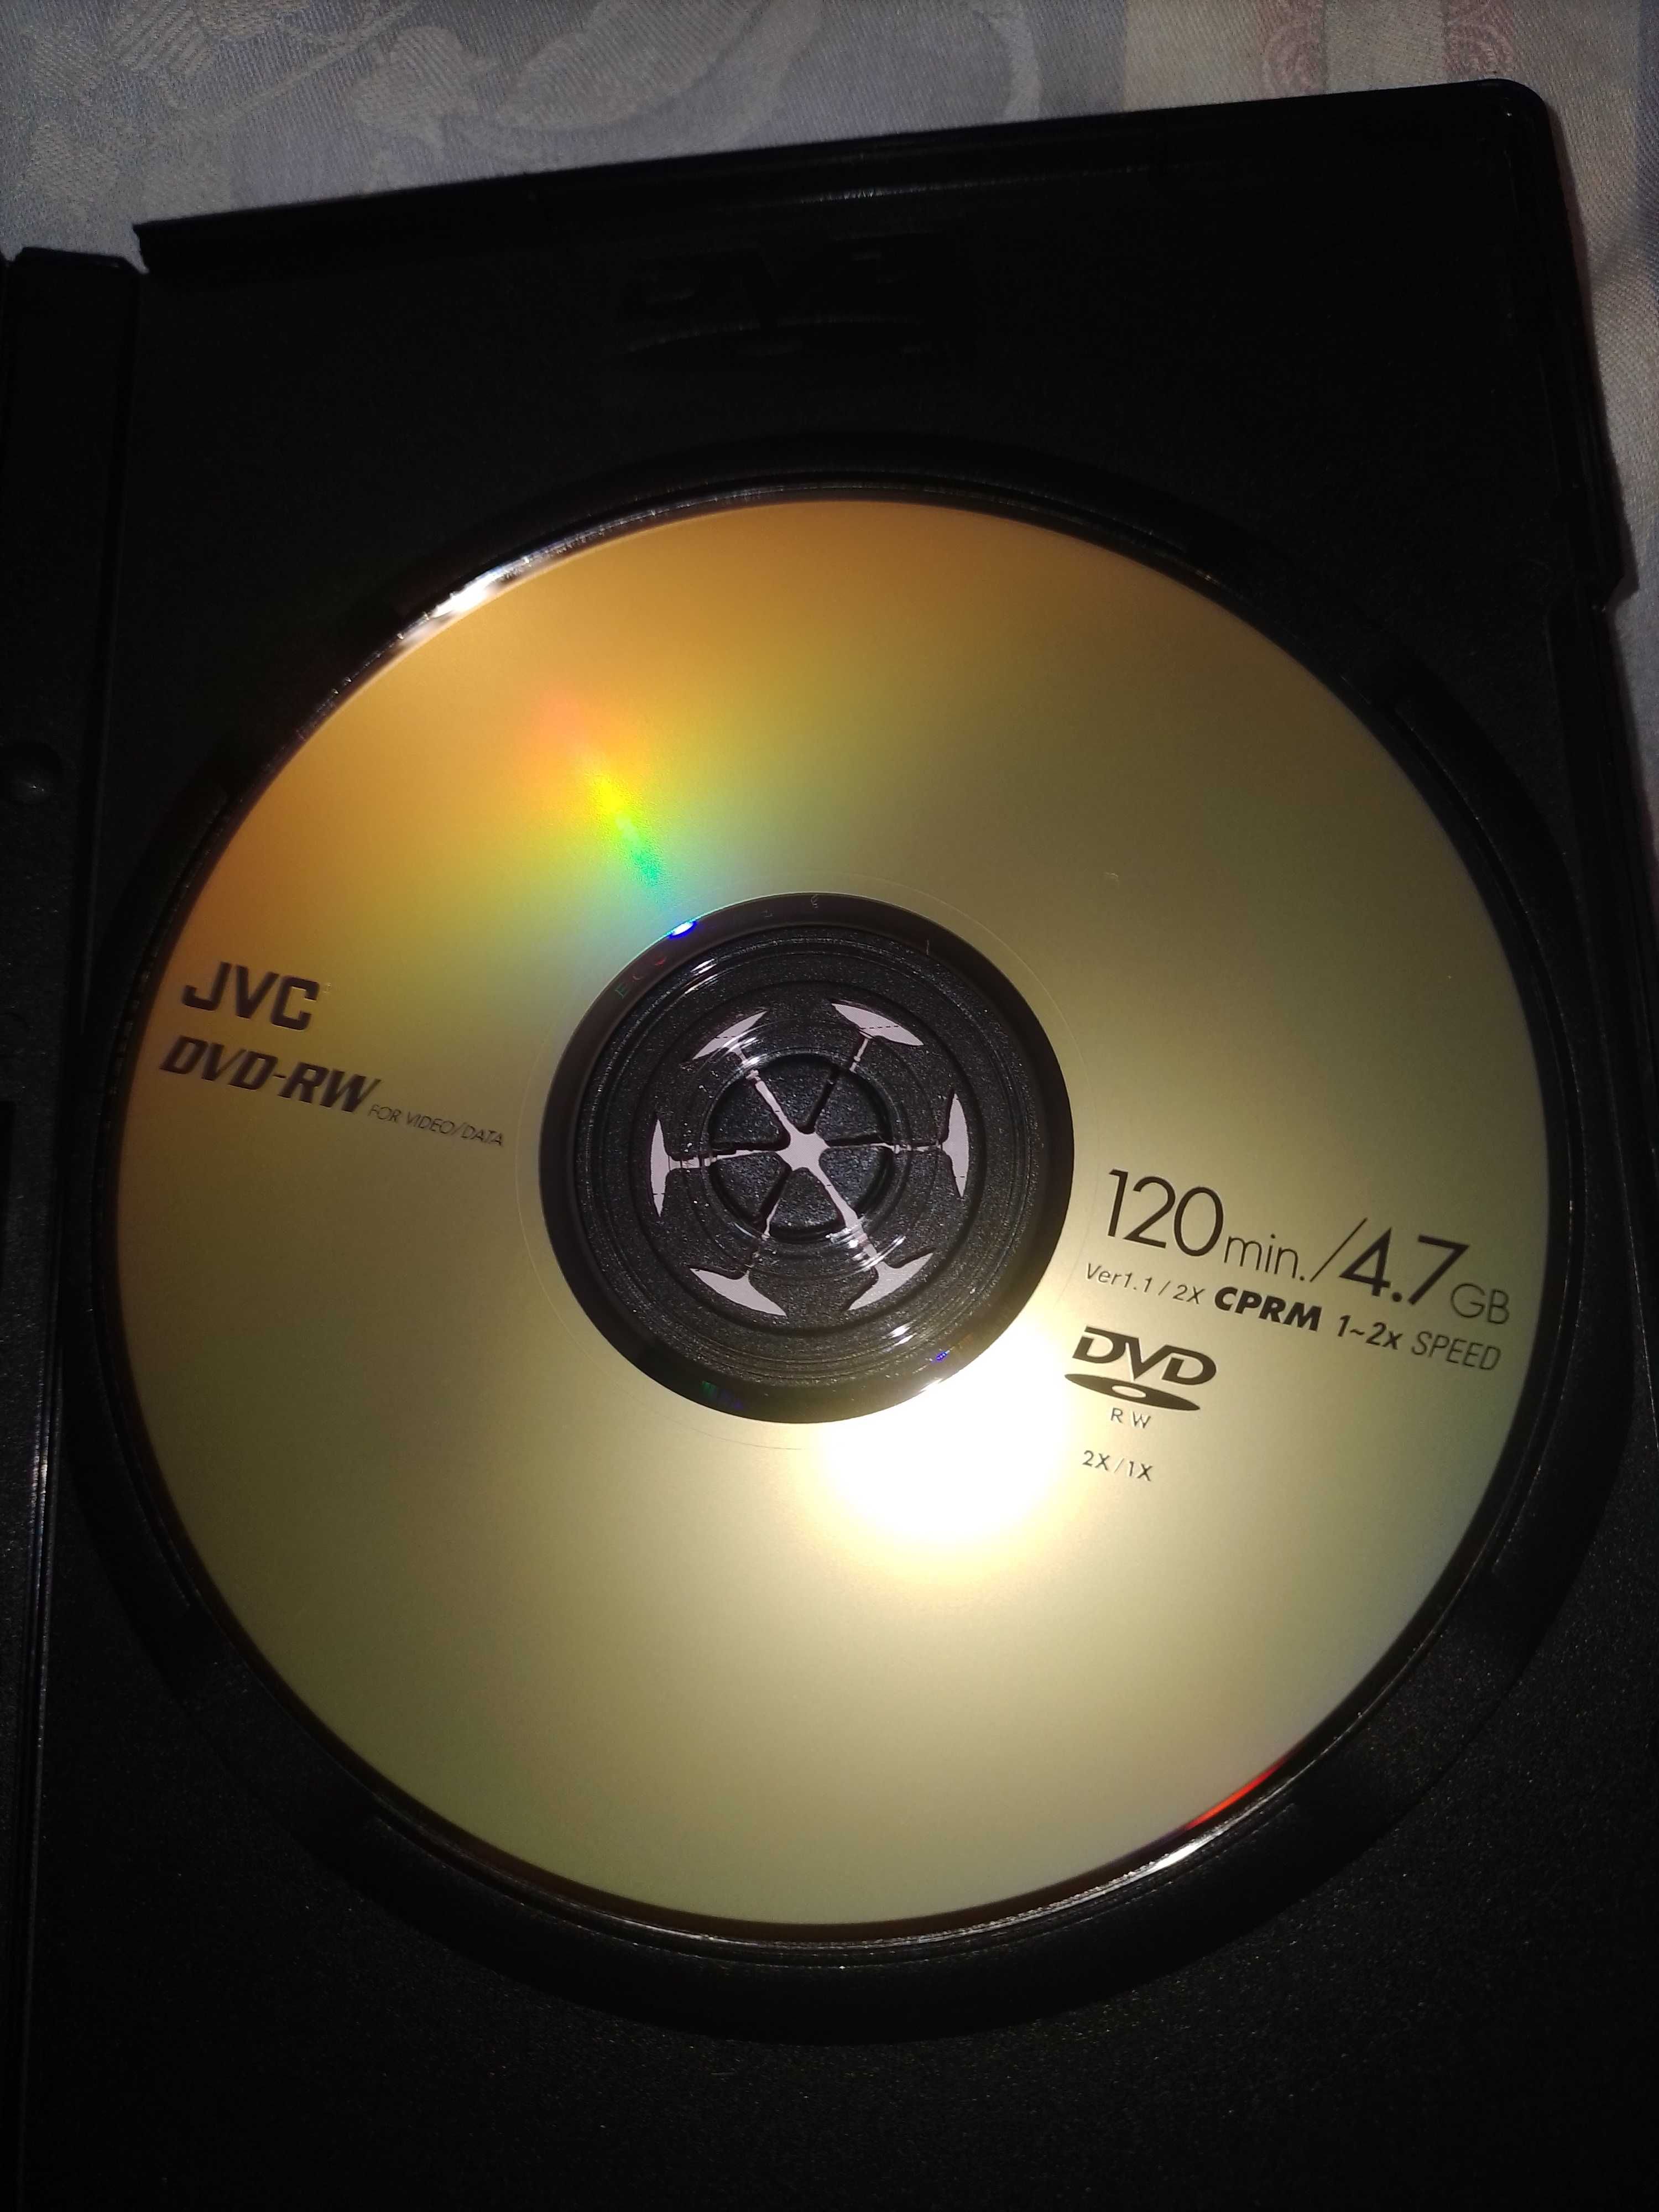 Диск JVC DVD-RW 120min 4.7GB Version 1.1/2X 1-2X Speed with CPRM